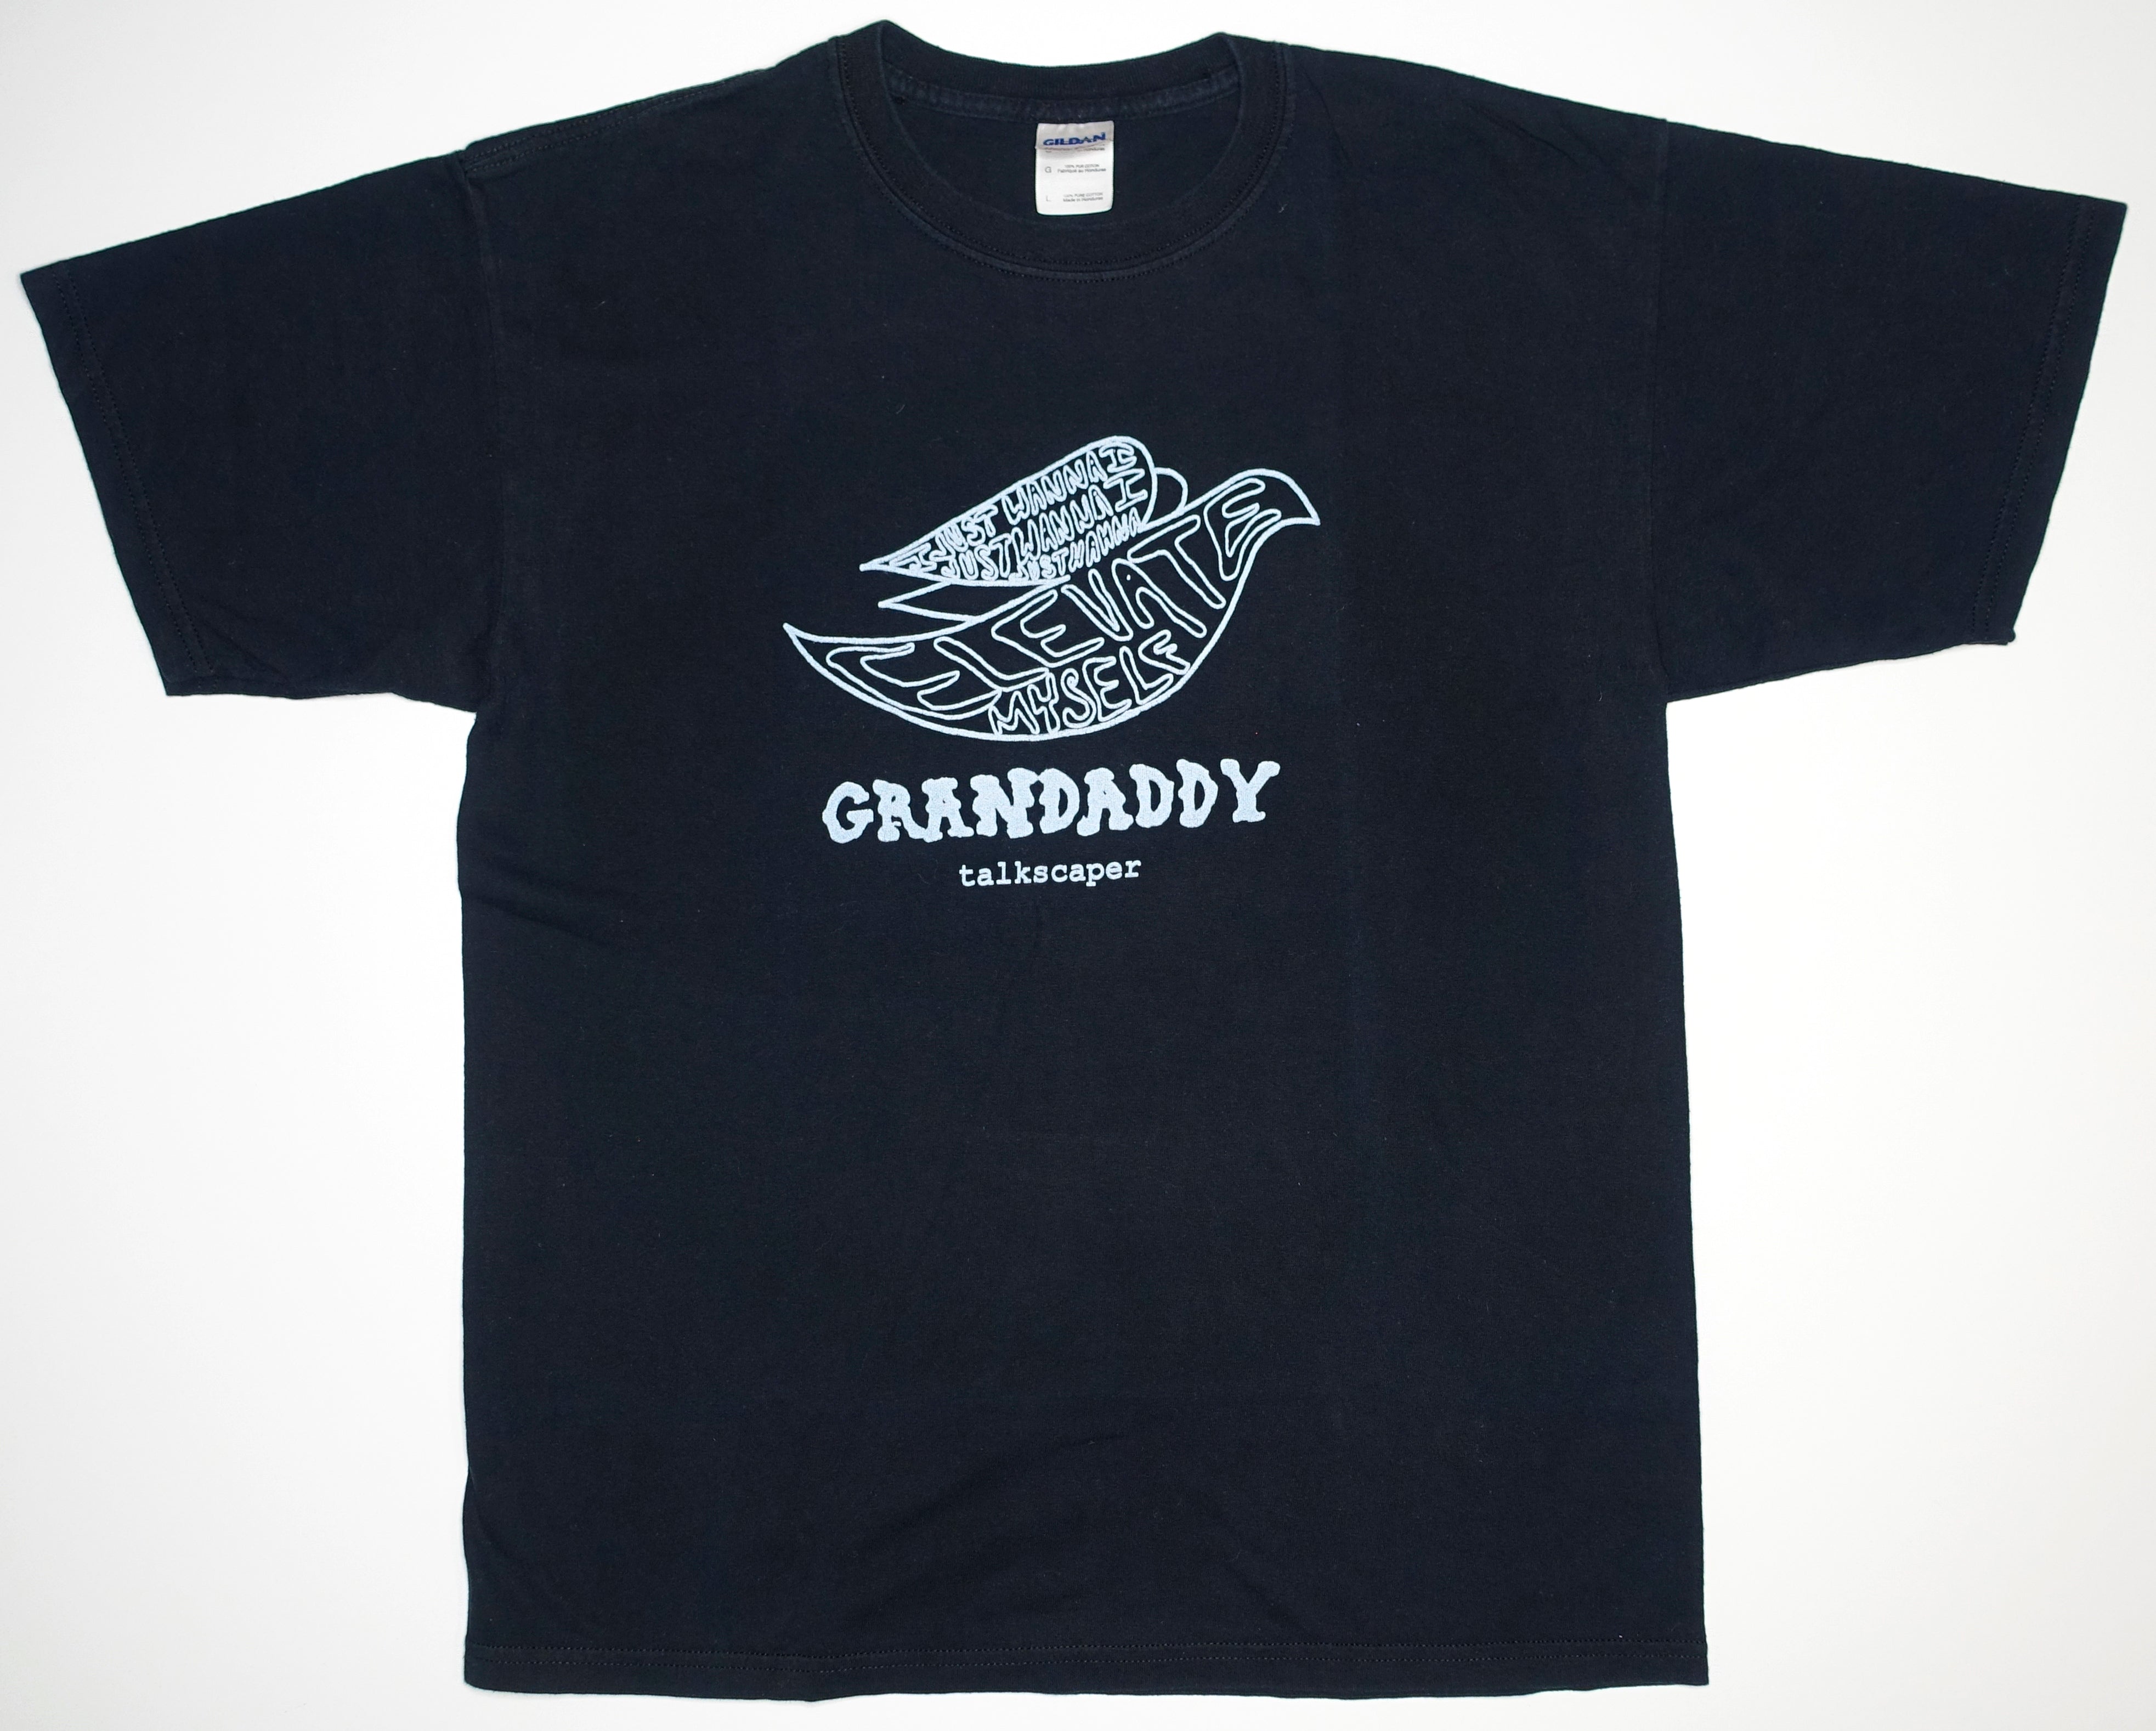 Grandaddy - Talkscaper / Elevate Myself 90's Tour Shirt Size Large